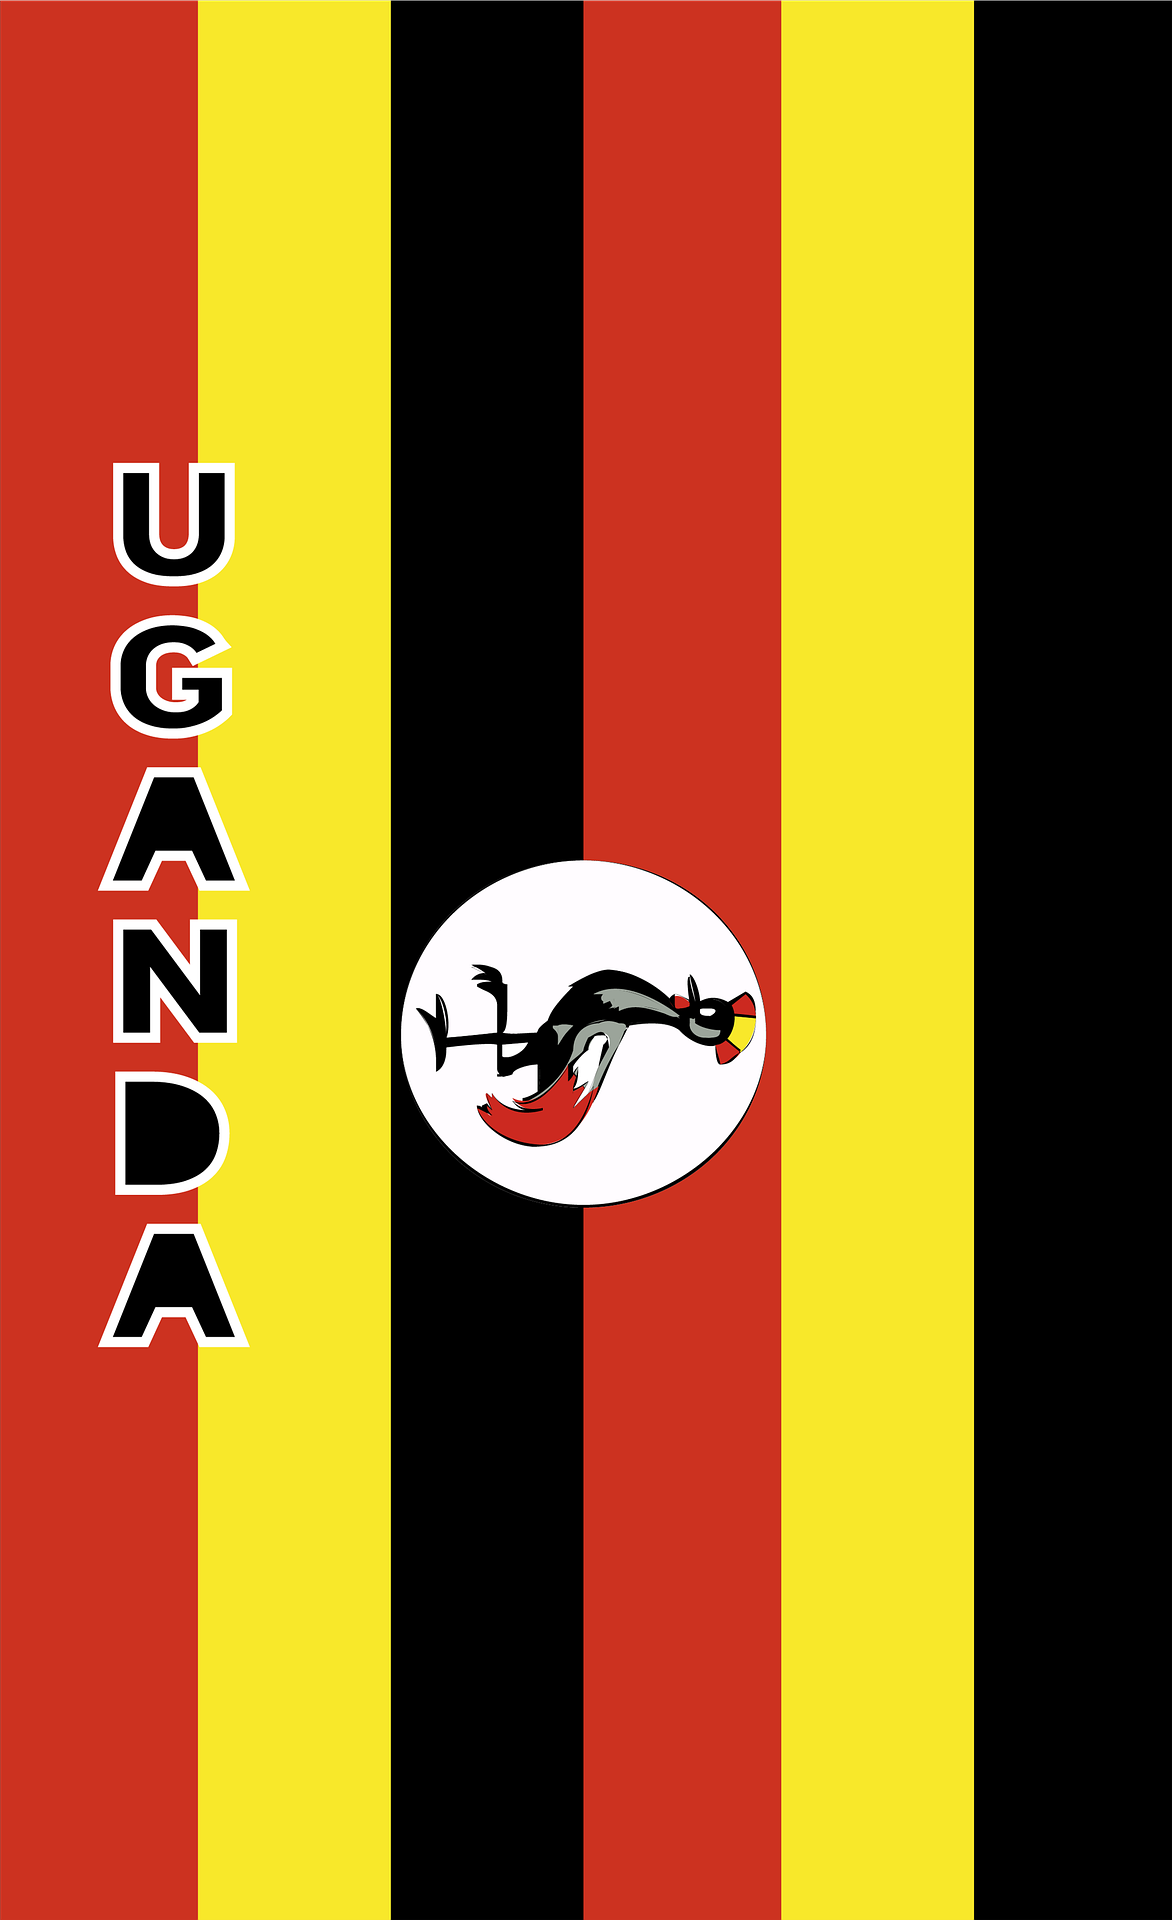 La diáspora ugandesa celebra las victorias